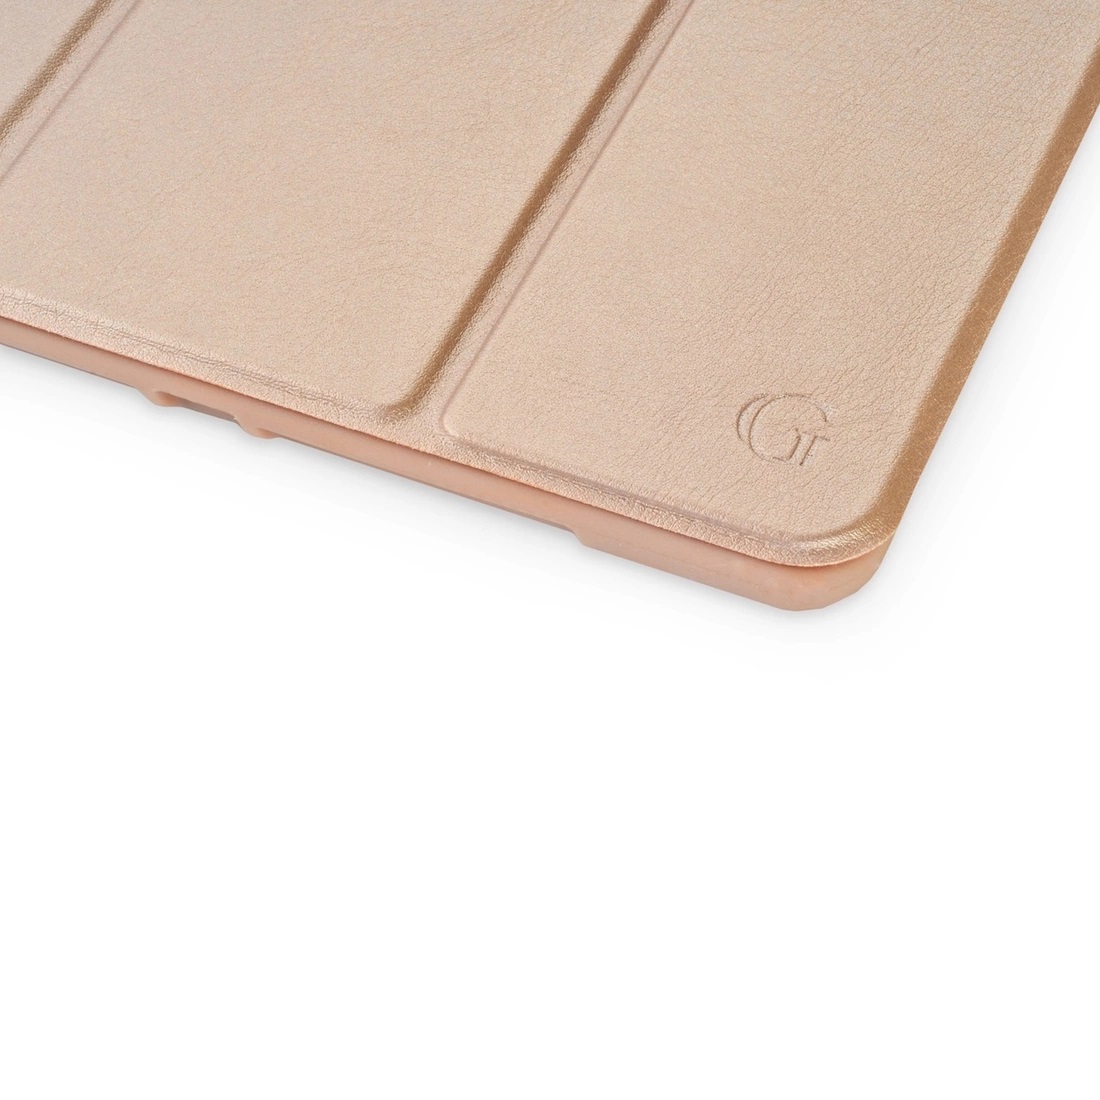 Чехол-книжка Gurdini Leather Series (pen slot) для iPad 10.2 (2019/2020) Gold